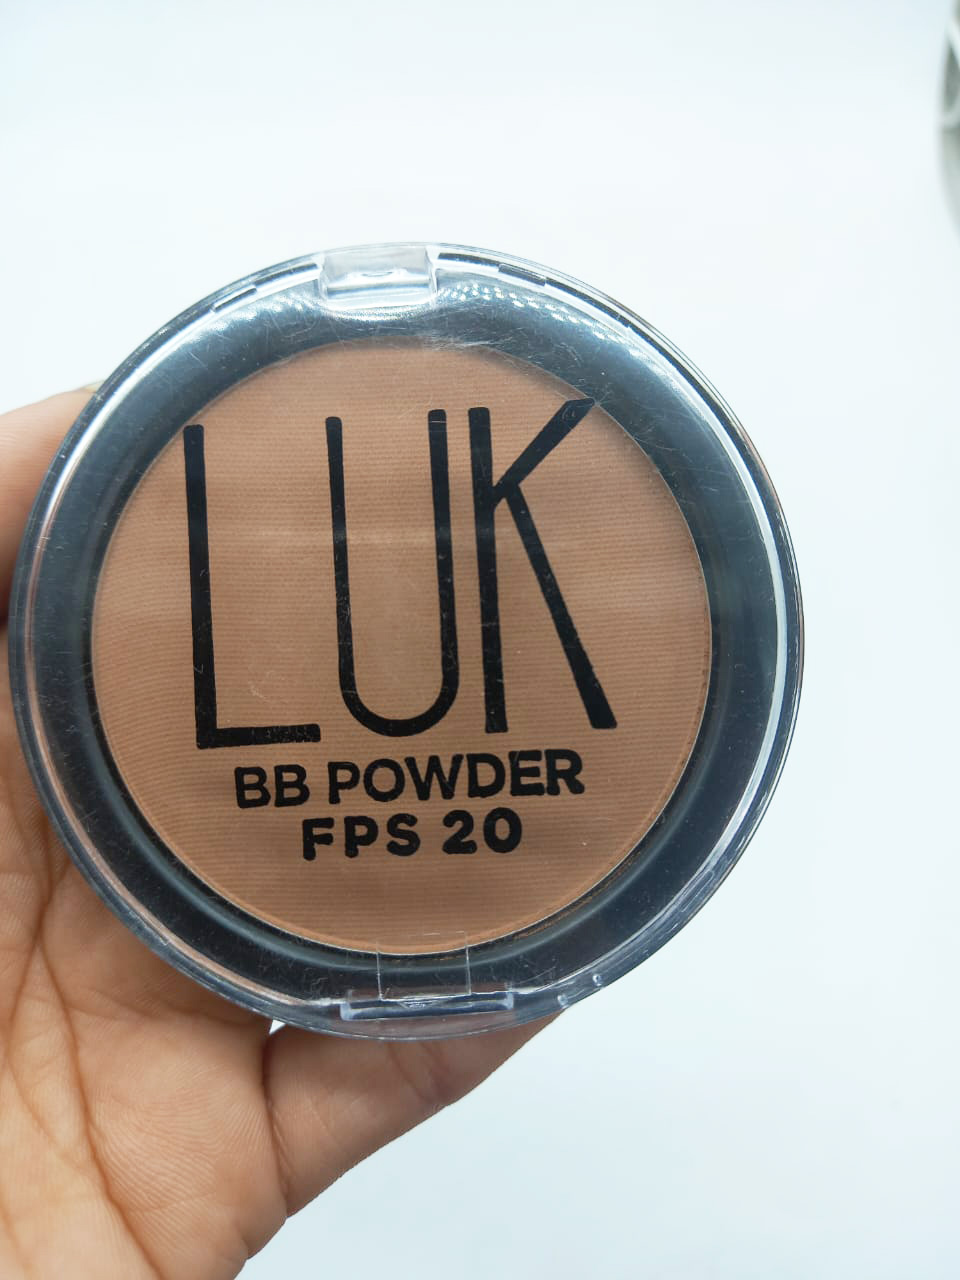 LUK BB Powder Compact